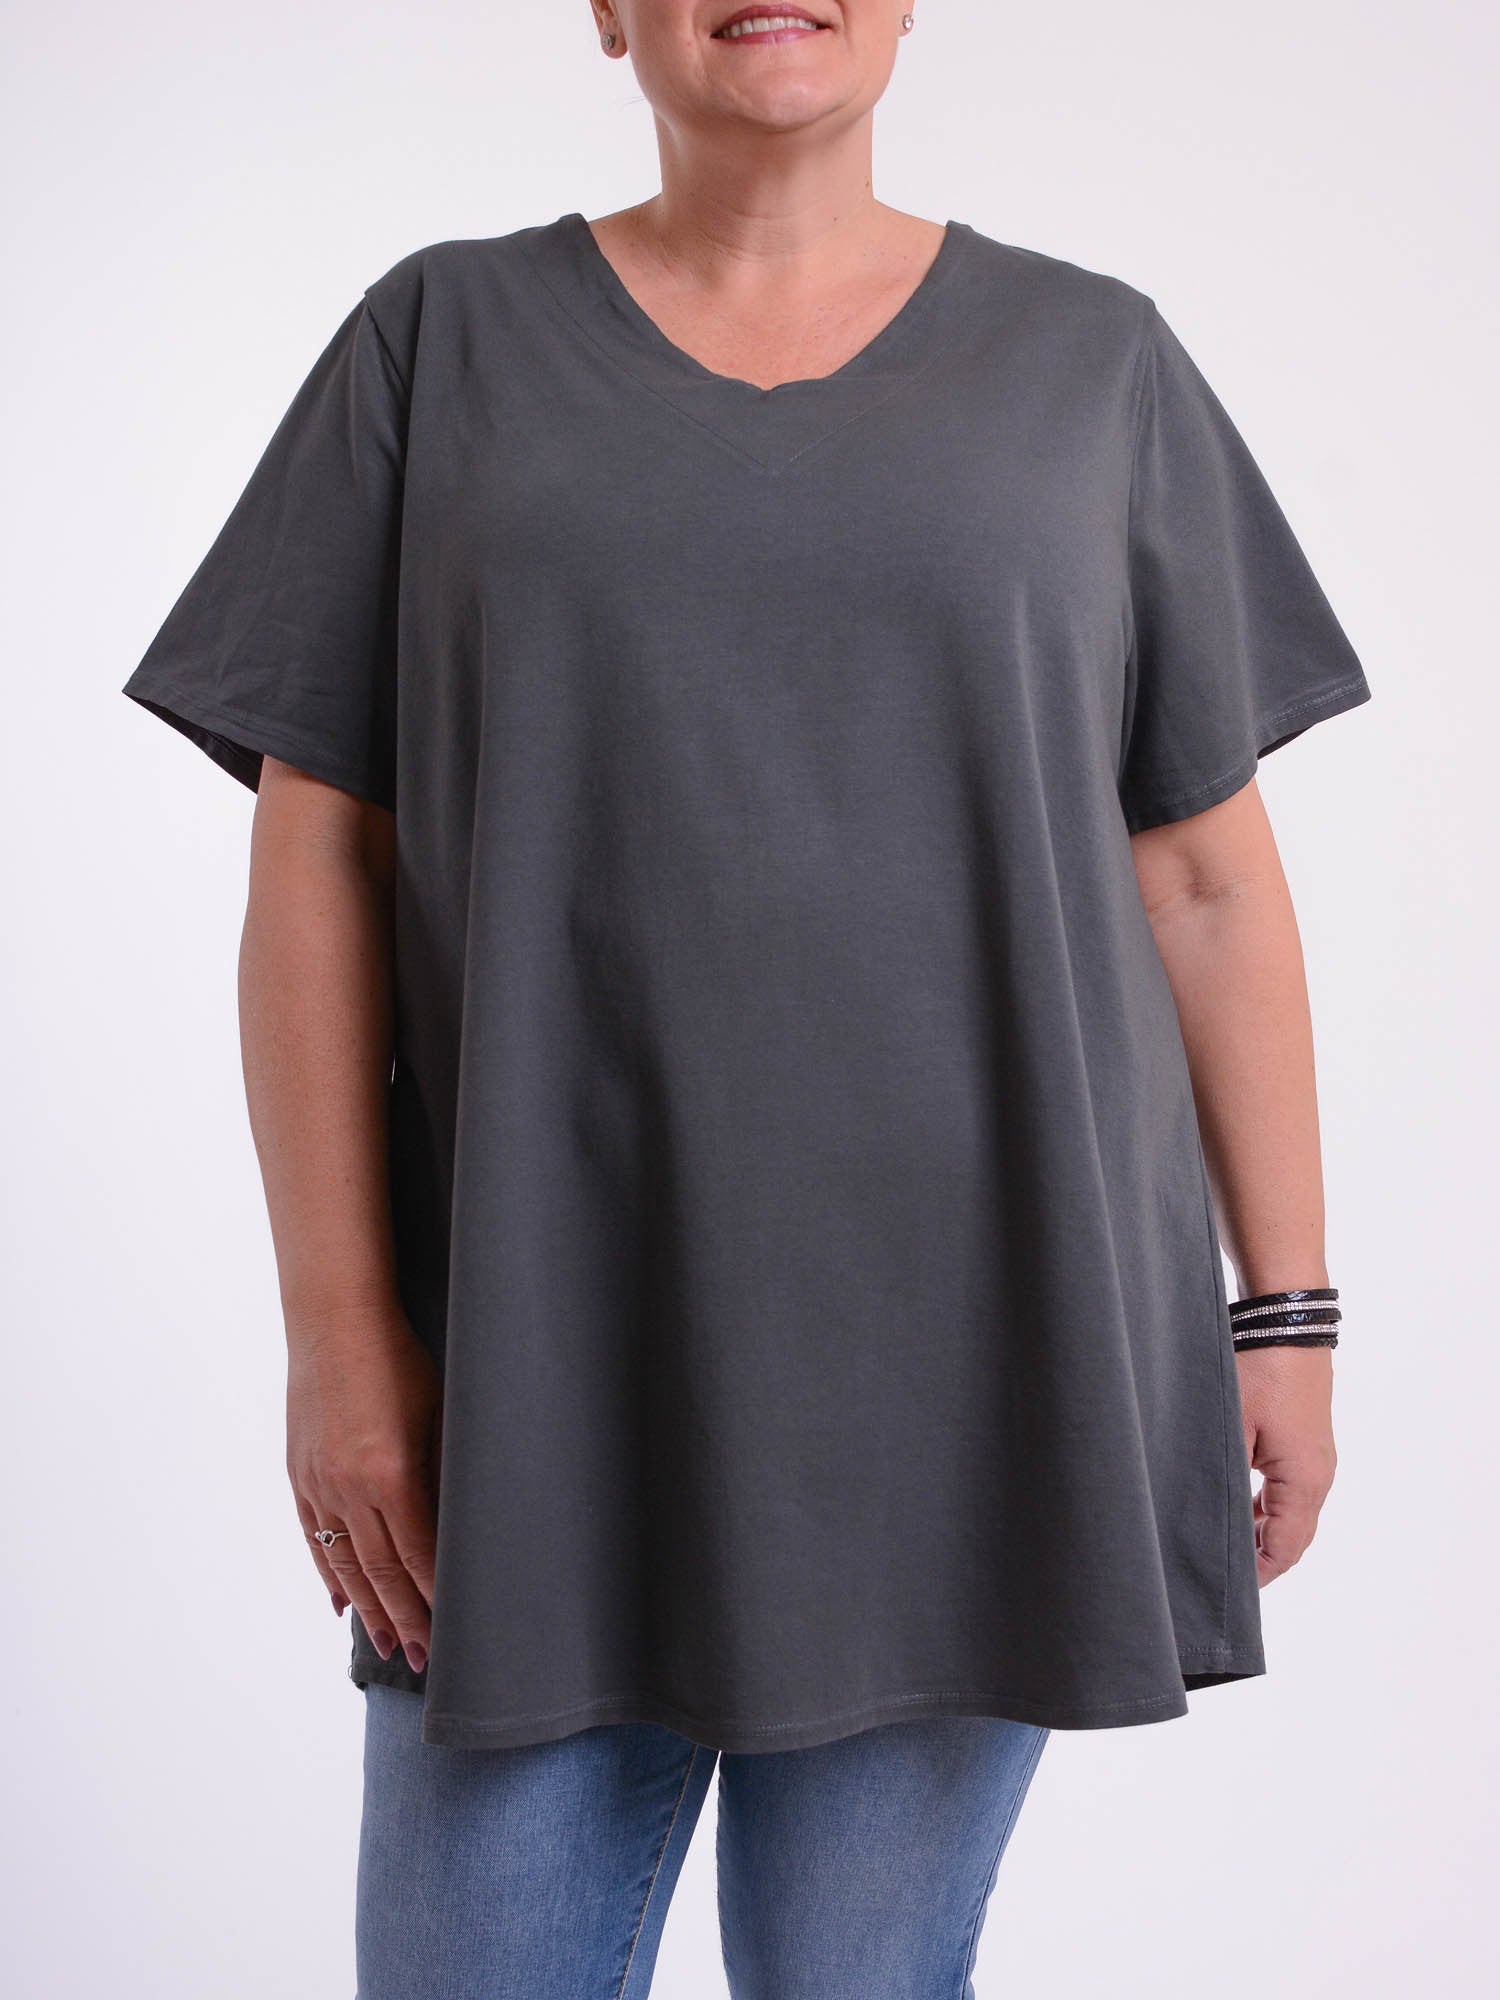 Basic Cotton Swing T Shirt - V Neck 10520, Tops & Shirts, Pure Plus Clothing, Lagenlook Clothing, Plus Size Fashion, Over 50 Fashion